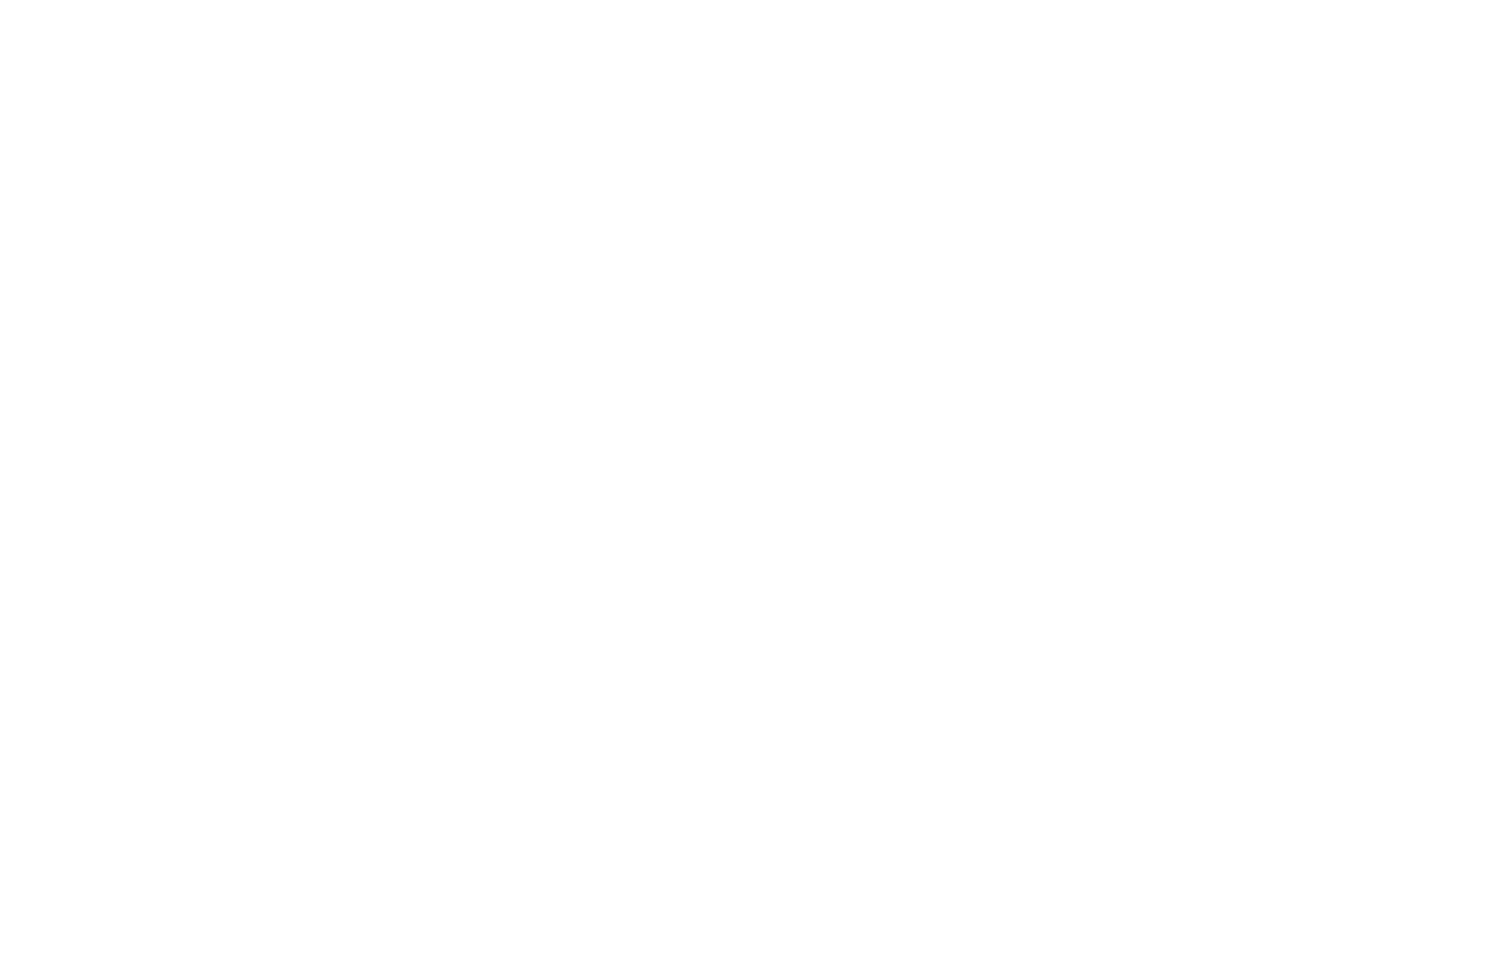 SPIRIT